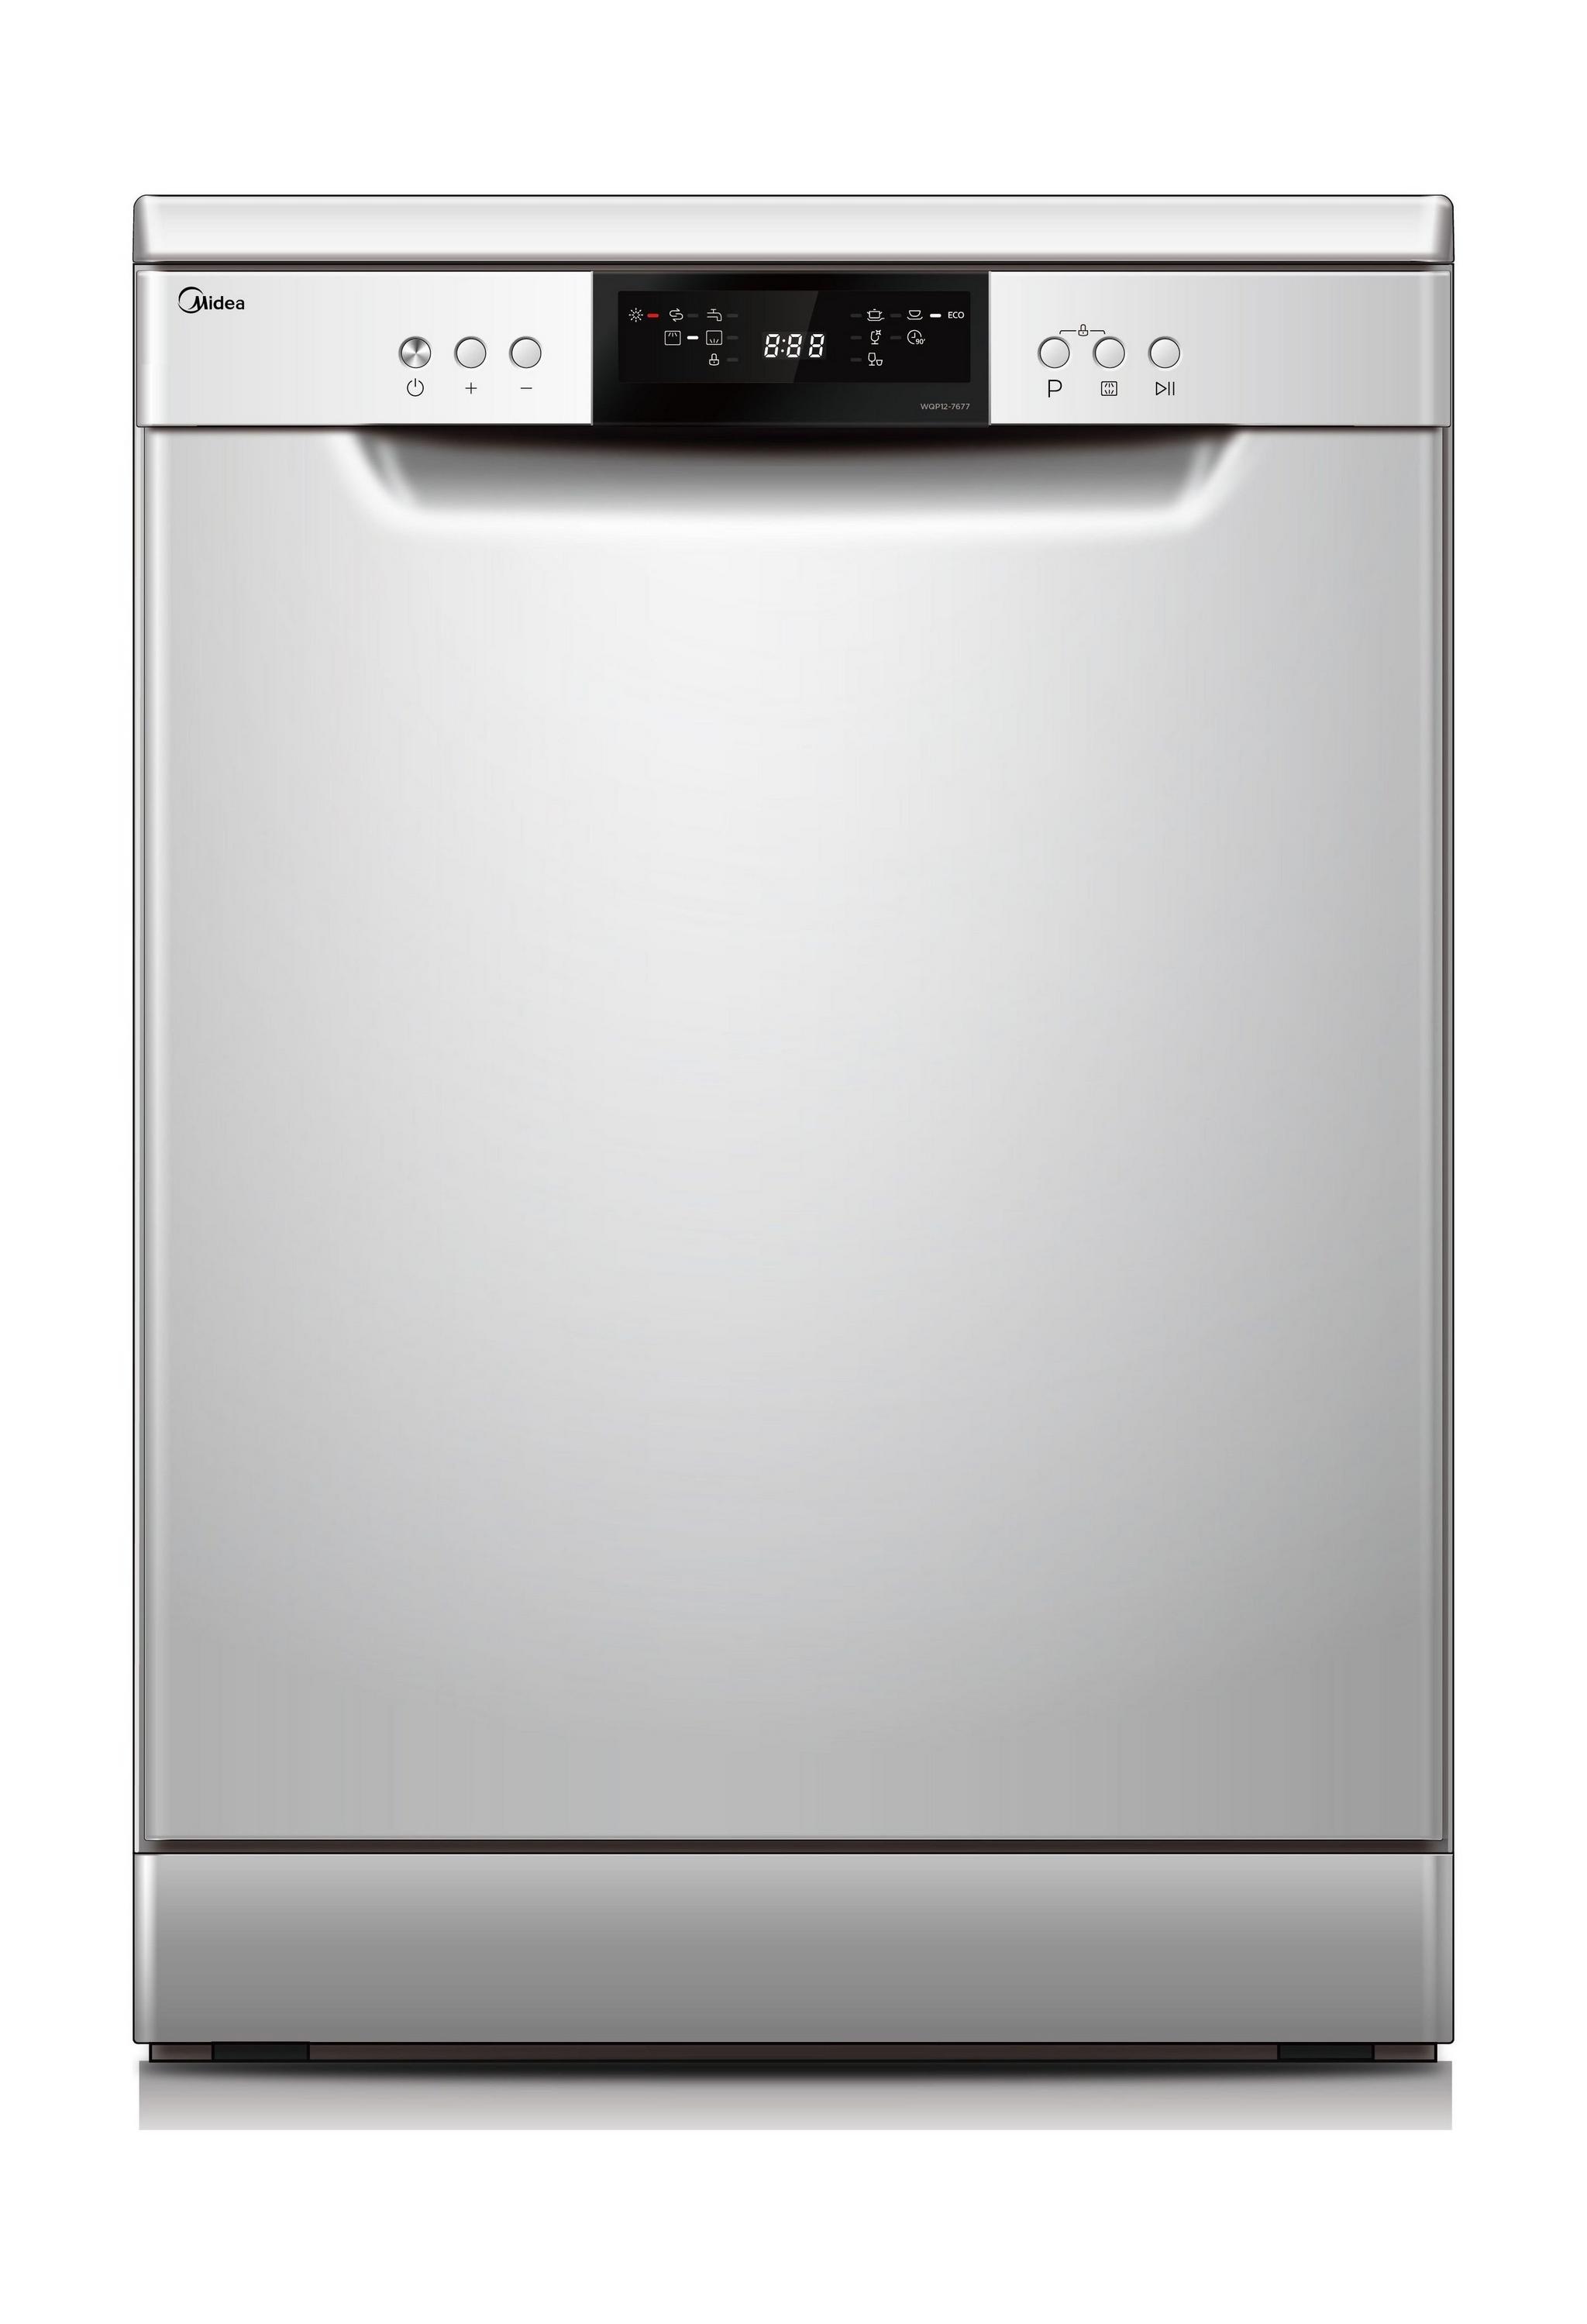 Midea 7 Programs 14 Settings Freestanding Dishwasher (WQP147617QW) - White